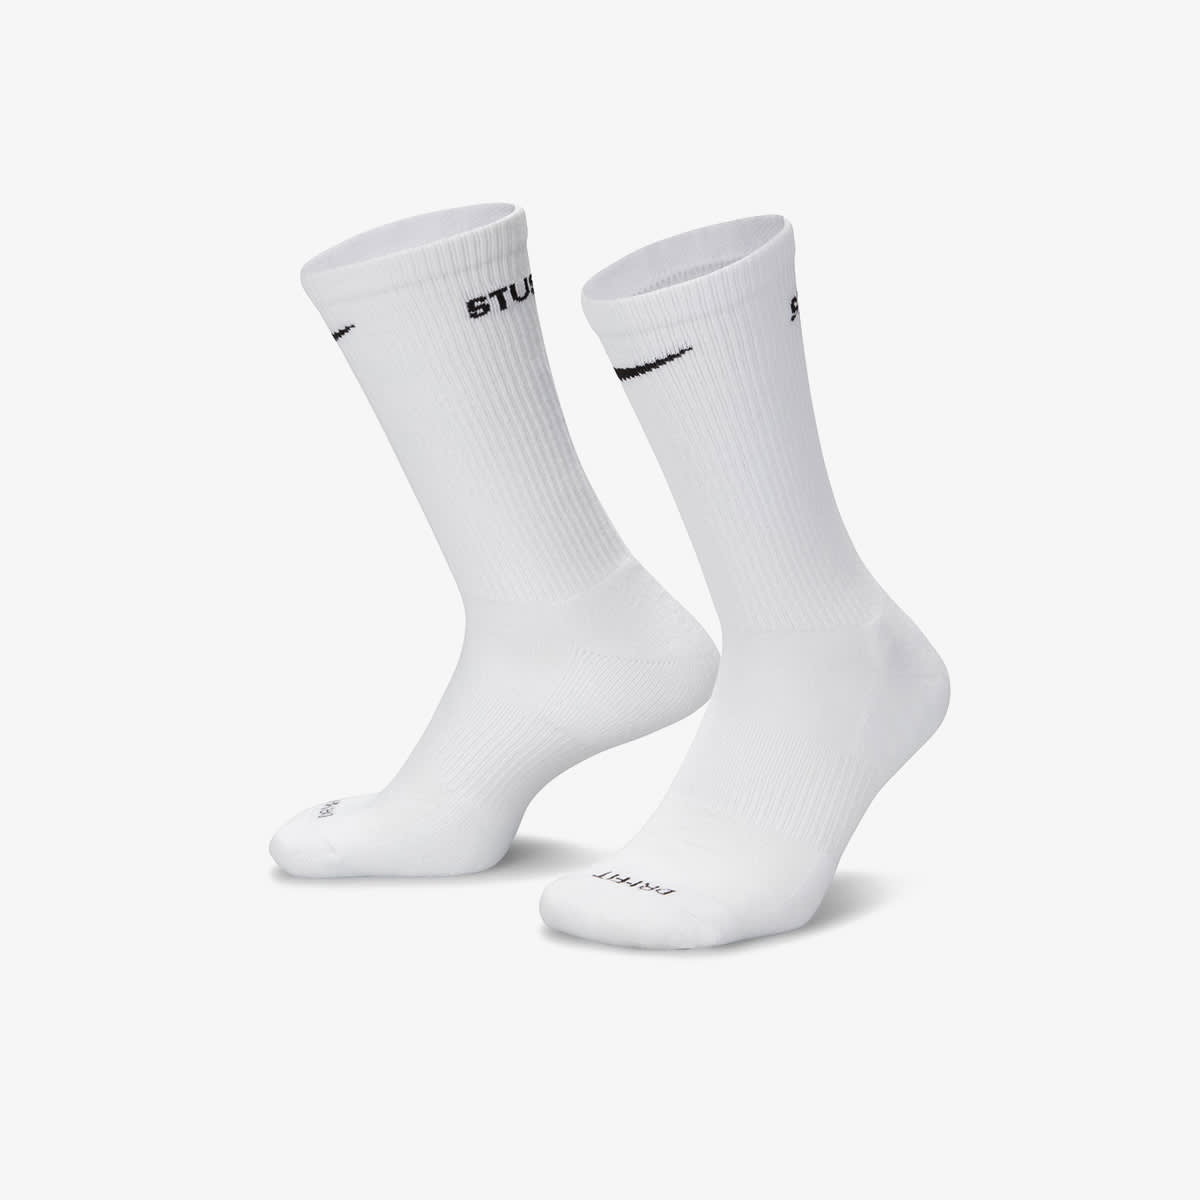 Nike x Stussy Socks (White & Black) | END. Launches